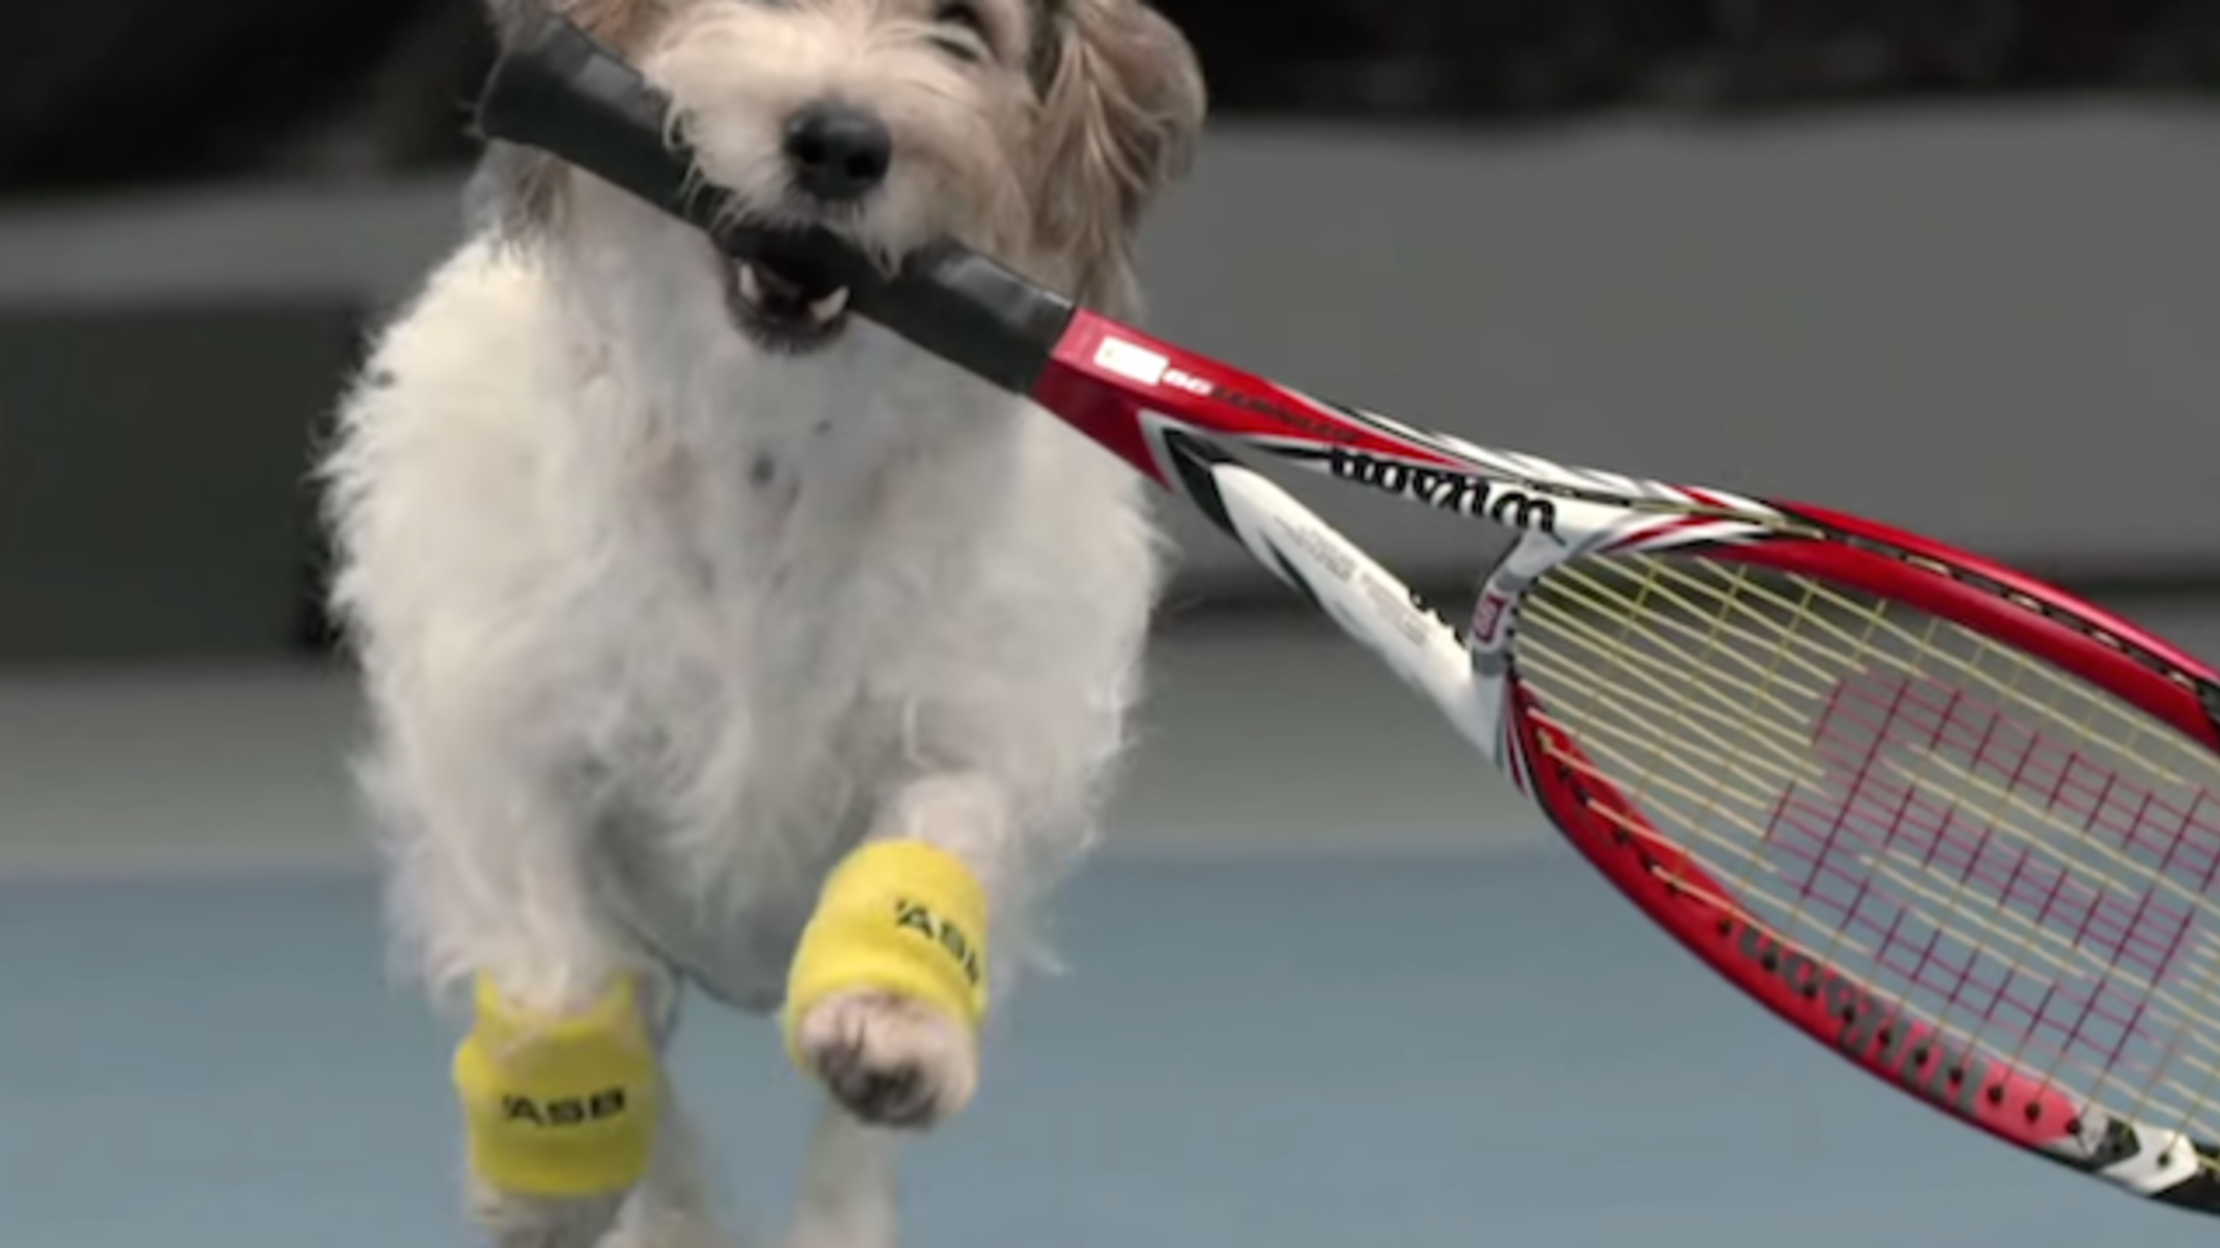 You can play tennis your. Собака с теннисной ракеткой. Собака с теннисным мячиком. Теннис собака. Теннисный мяч для собак.